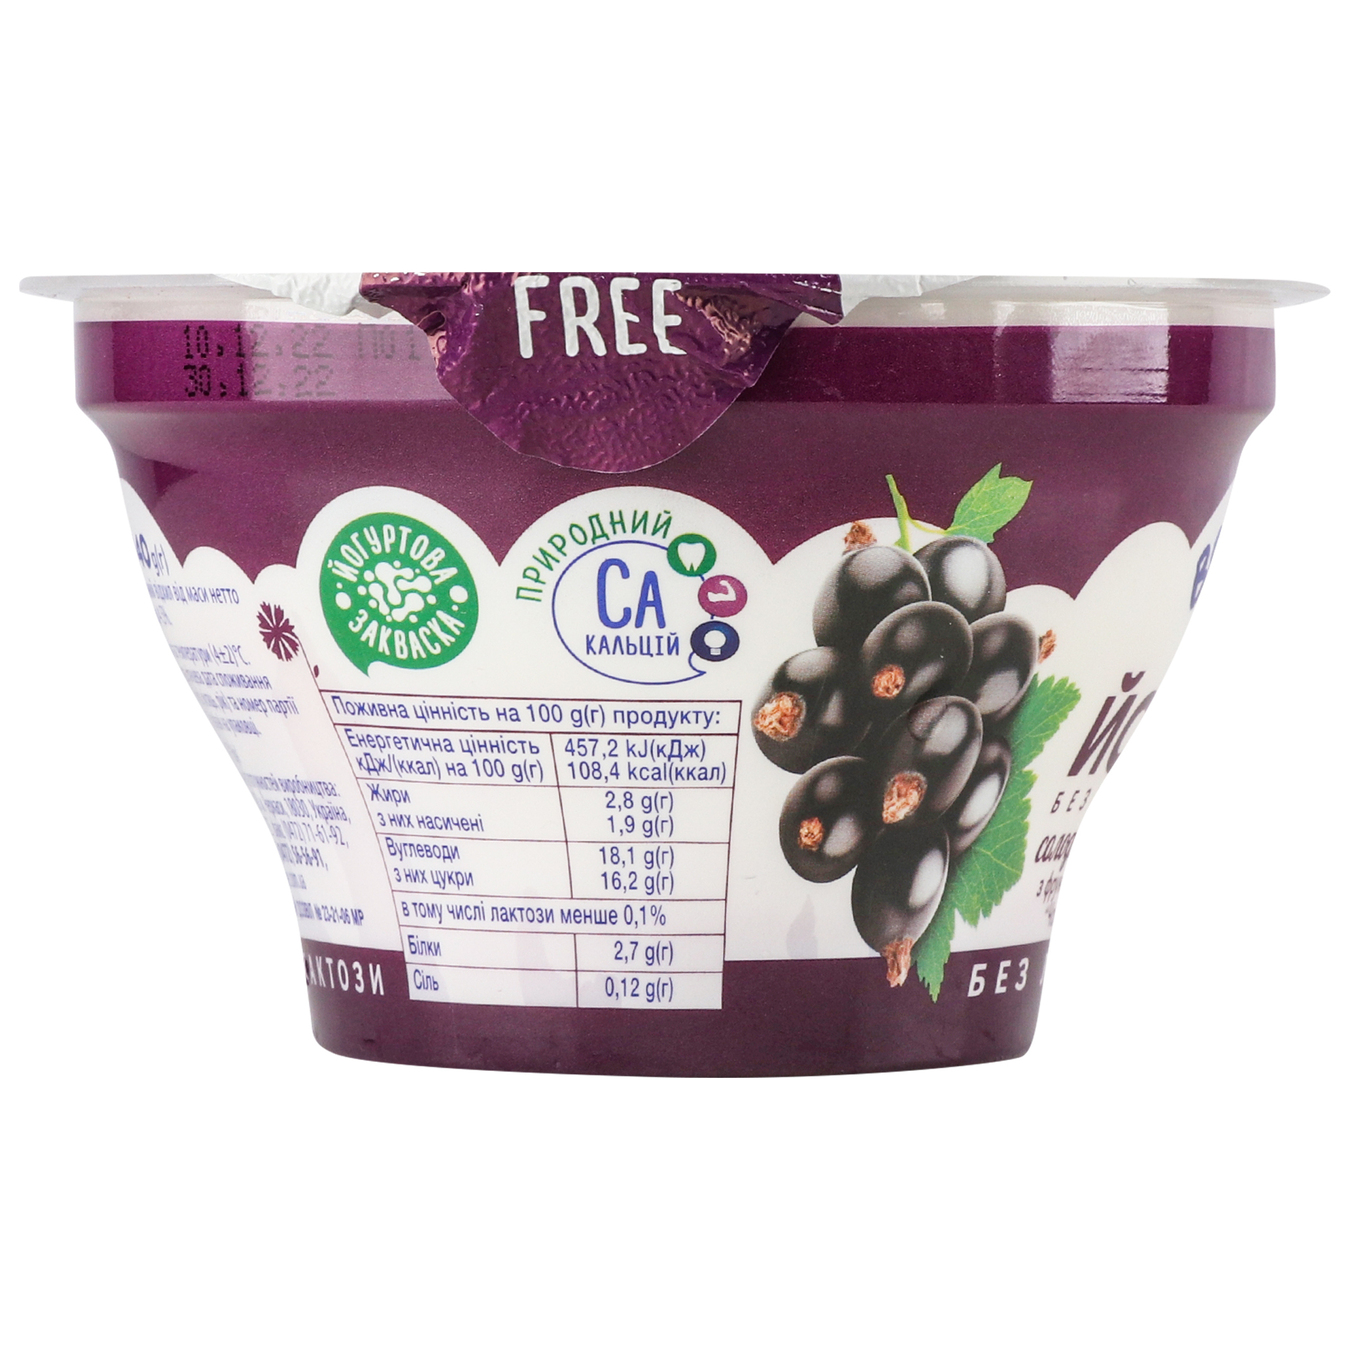 Yogurt cornfield black currant lactose-free 2.8% cup 140g 2